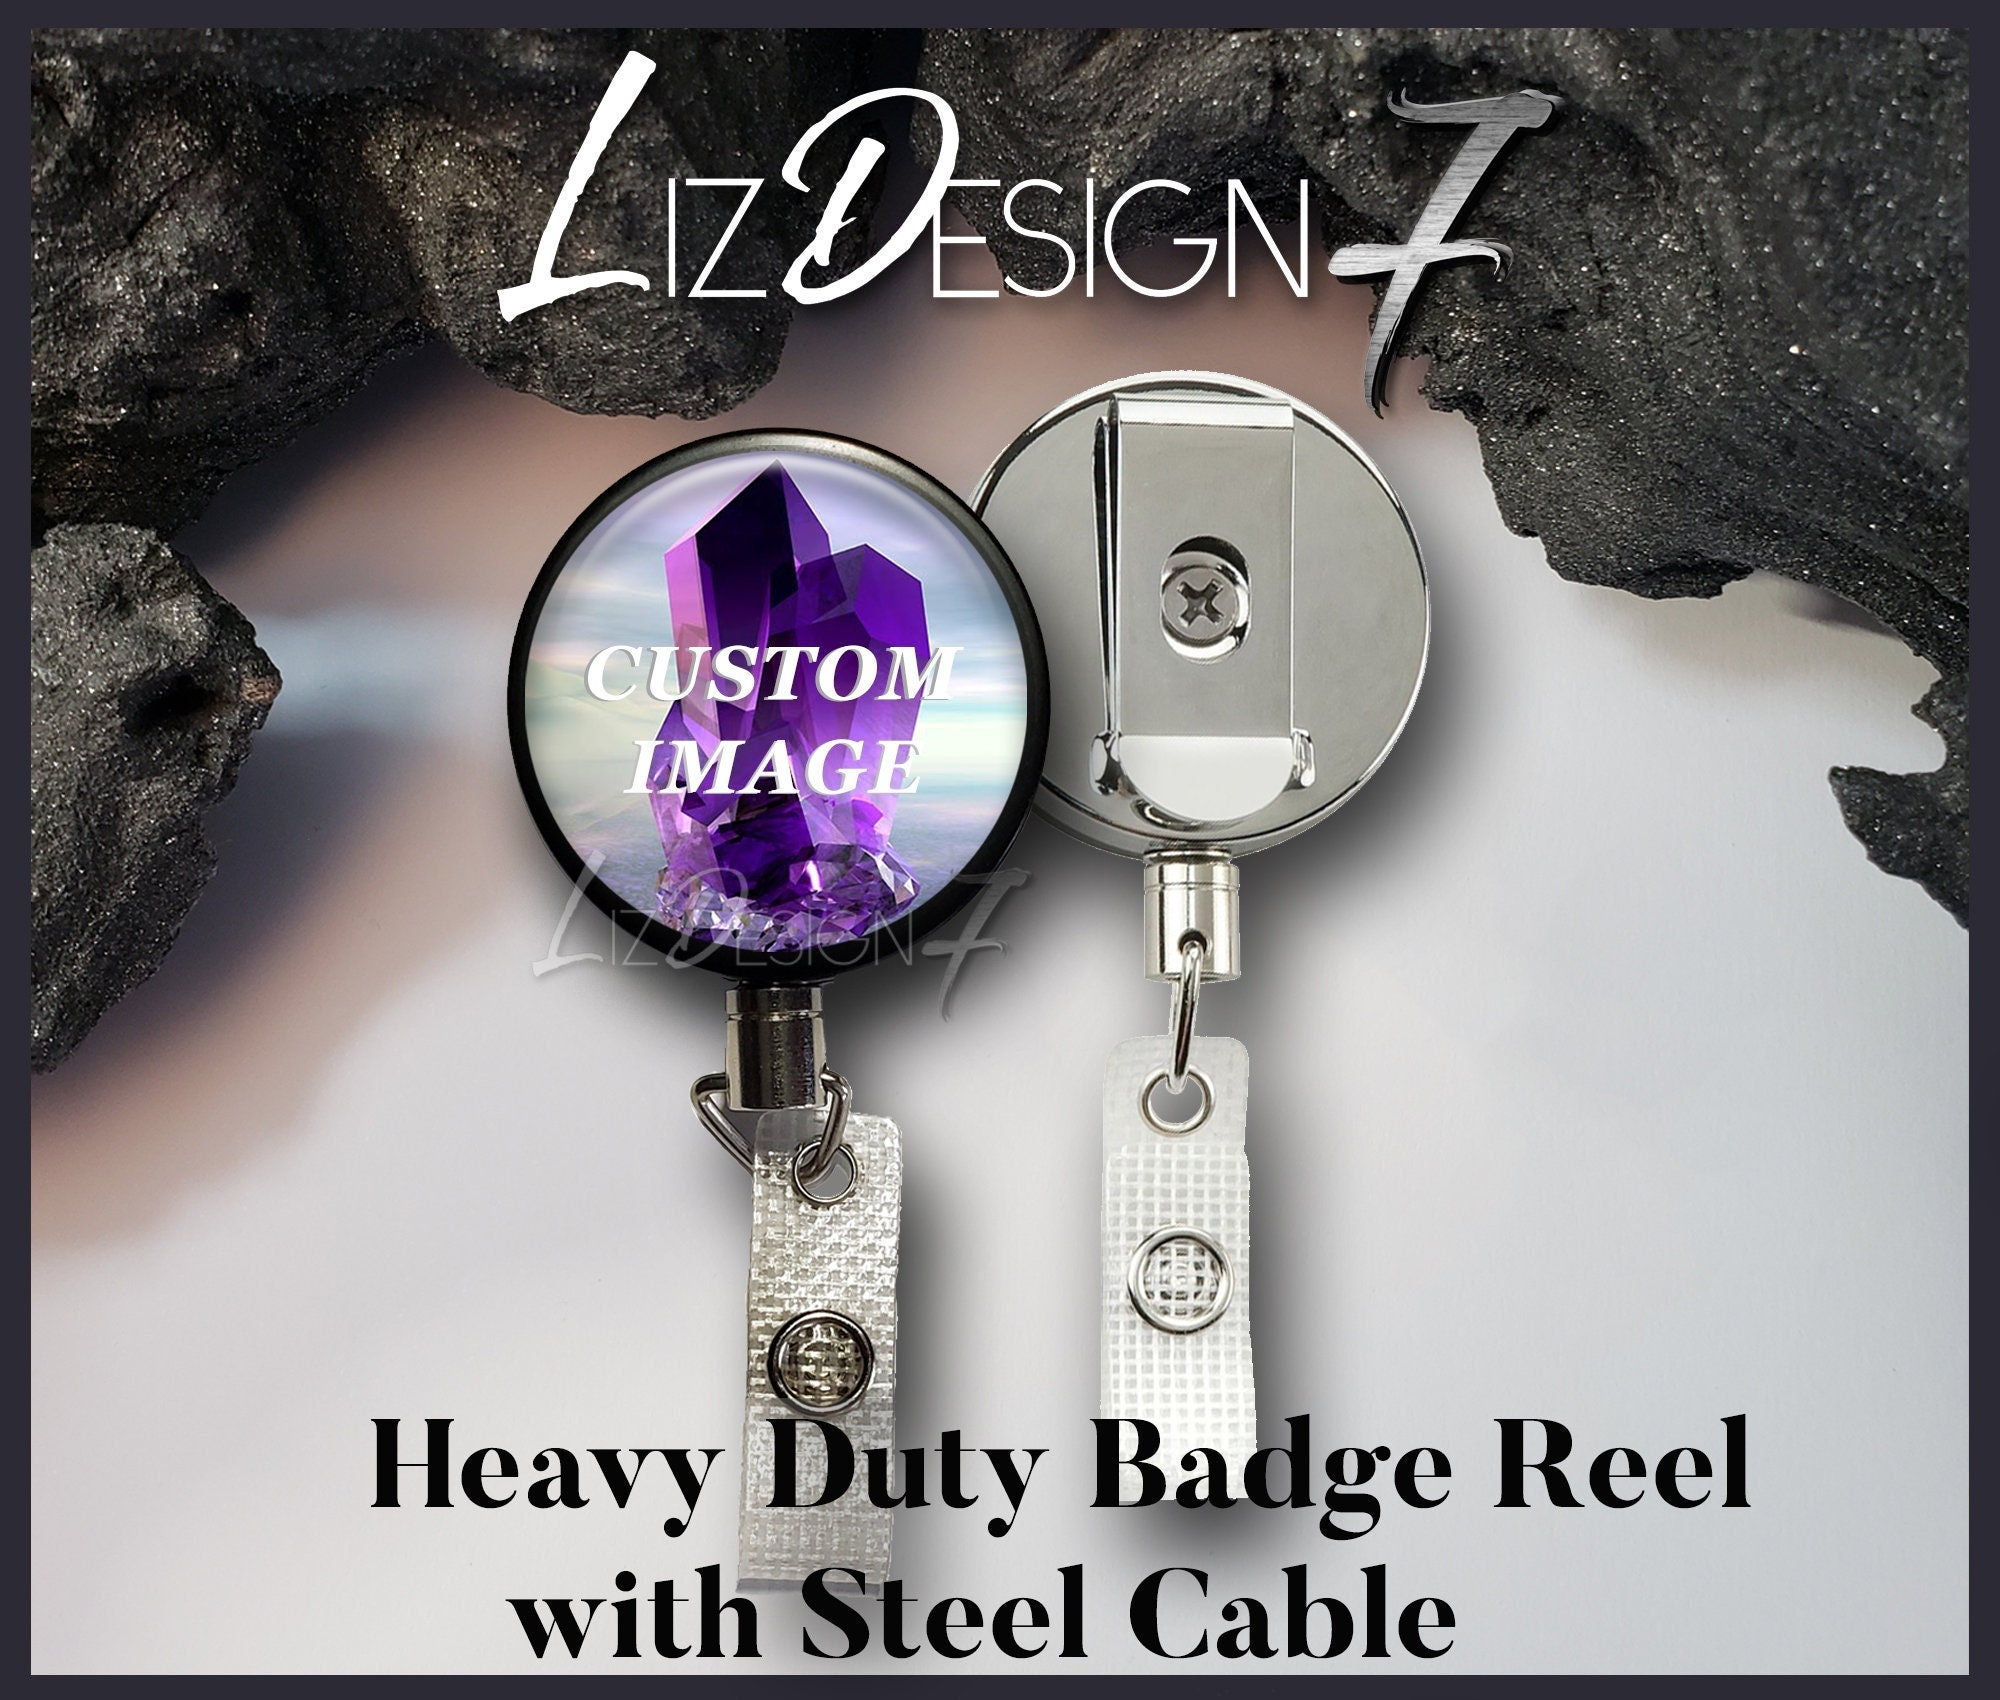 Custom Image Heavy Duty Badge Reel with Steel Cable - Custom Photo Heavy Duty Badge Holder with Steel Cable - Custom Badge Reel